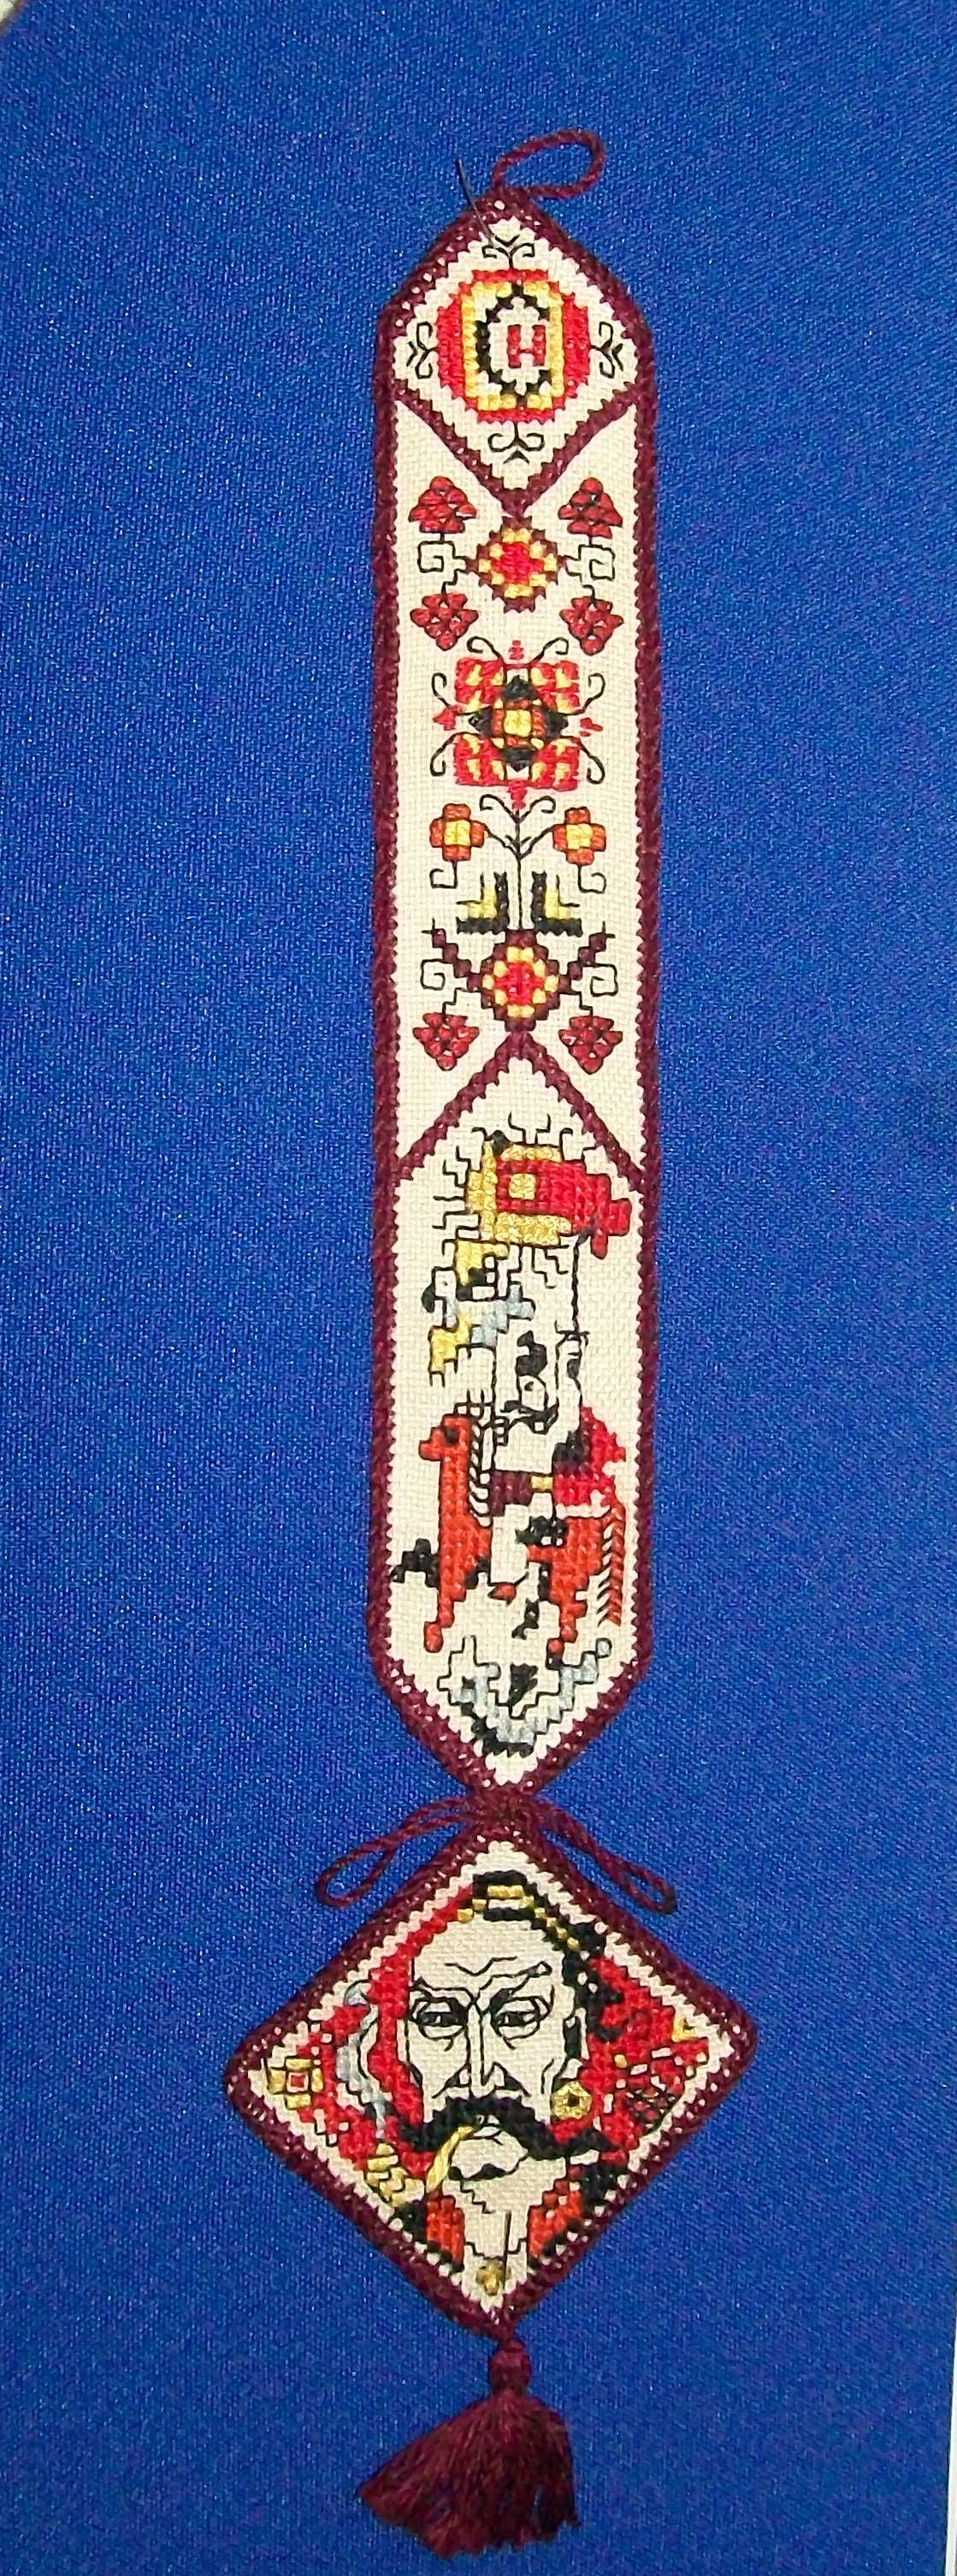 Svitlychna, Nadia. Bookmark embroidered in Mordovia, 1970s. Applied arts object.